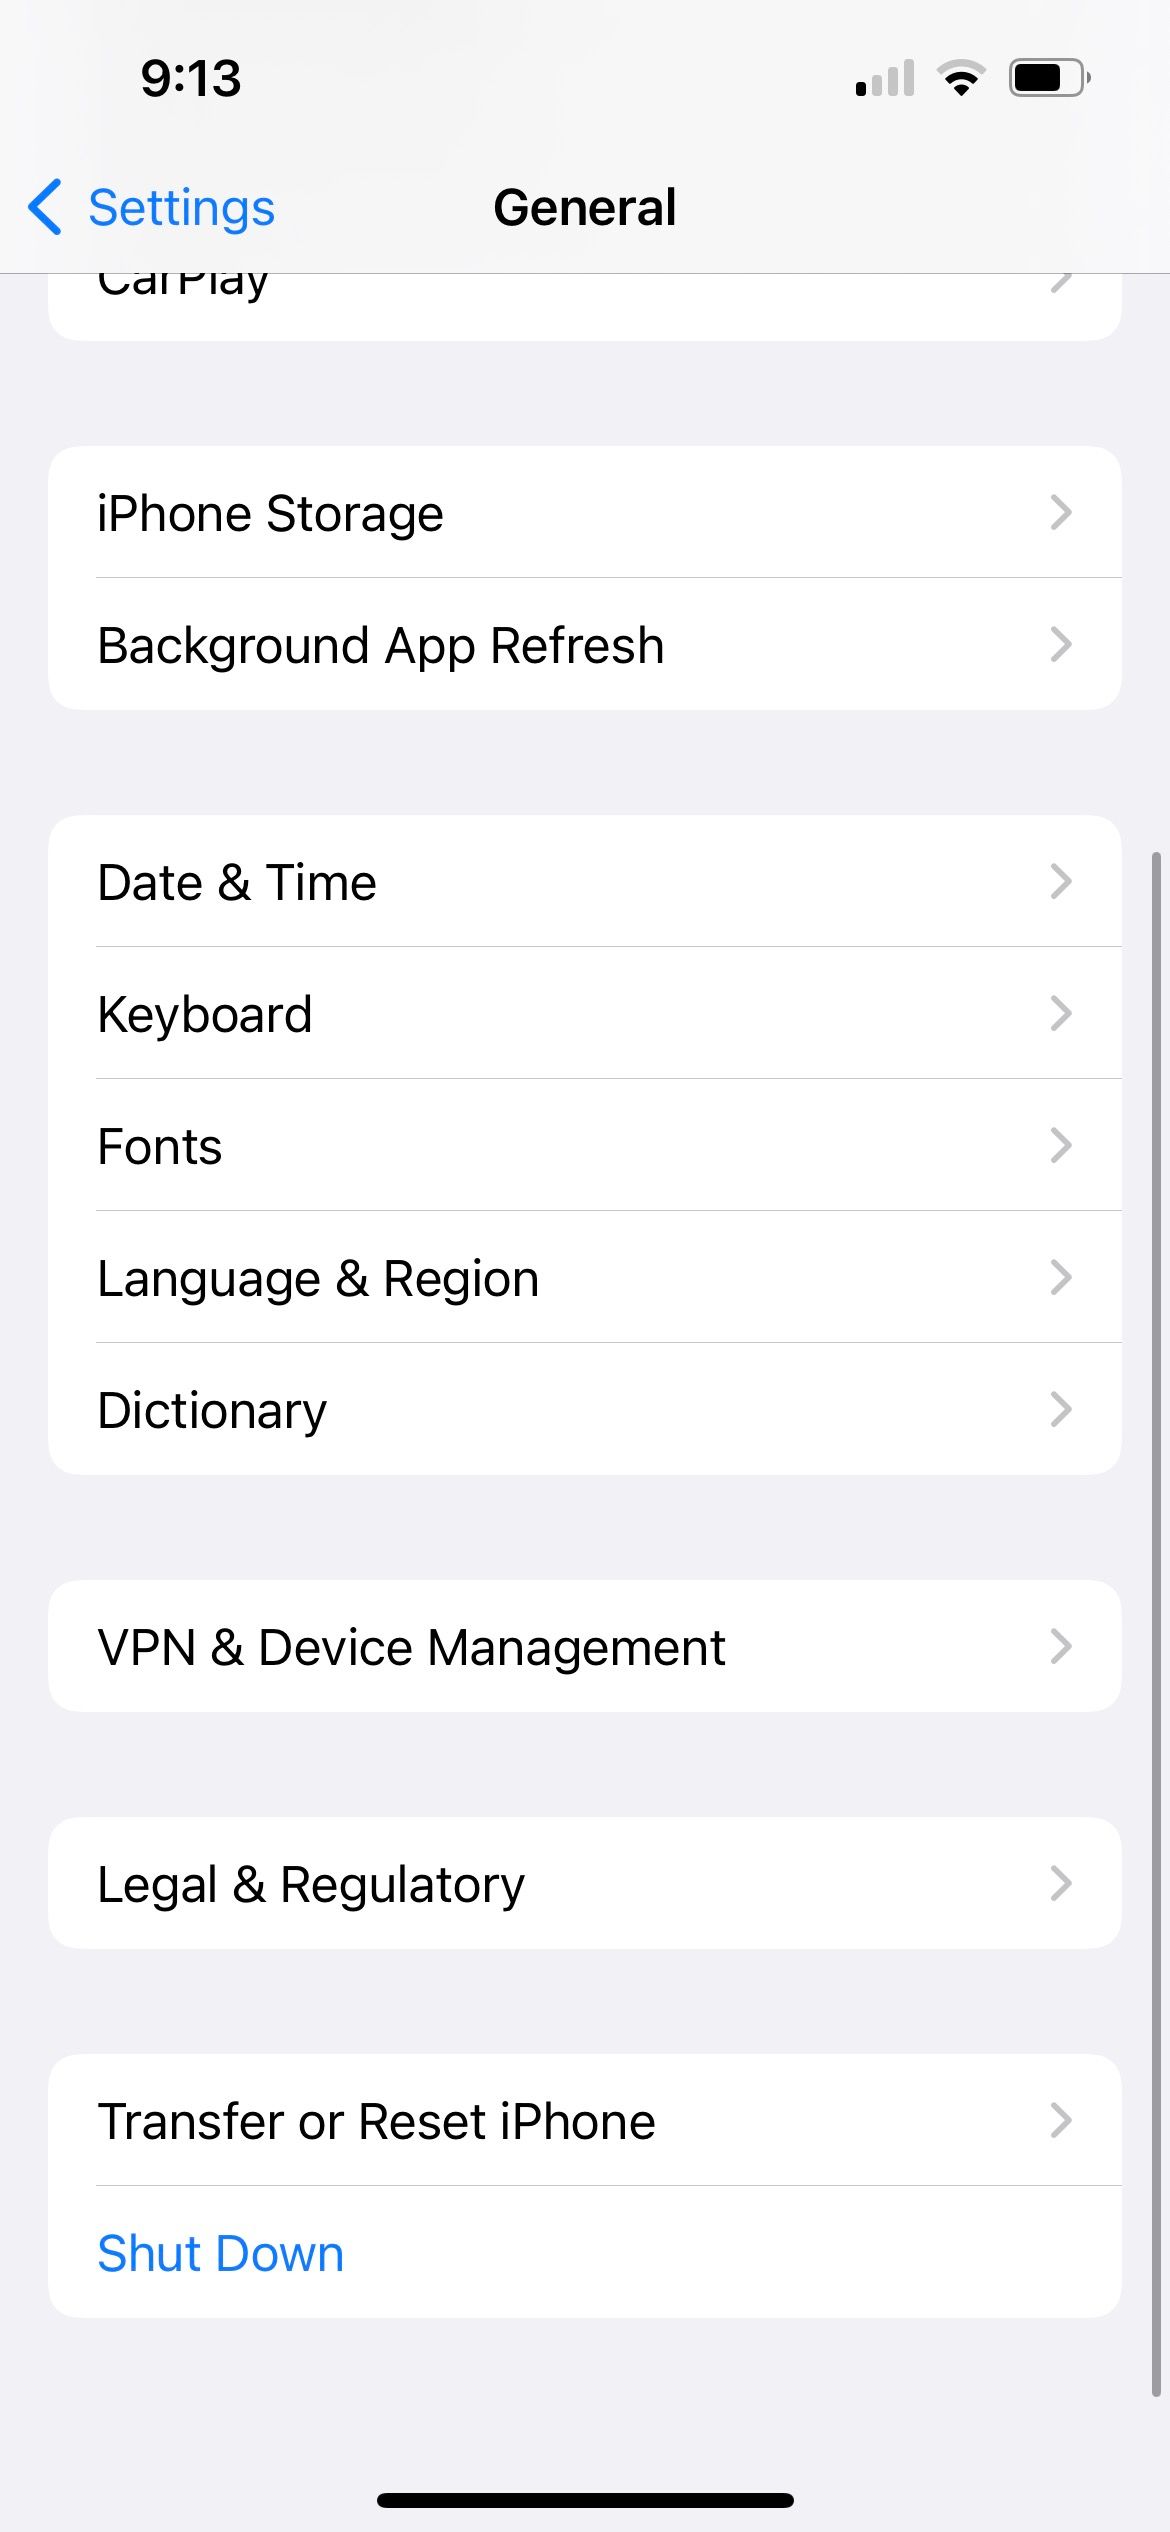 general settings in iphone settings app